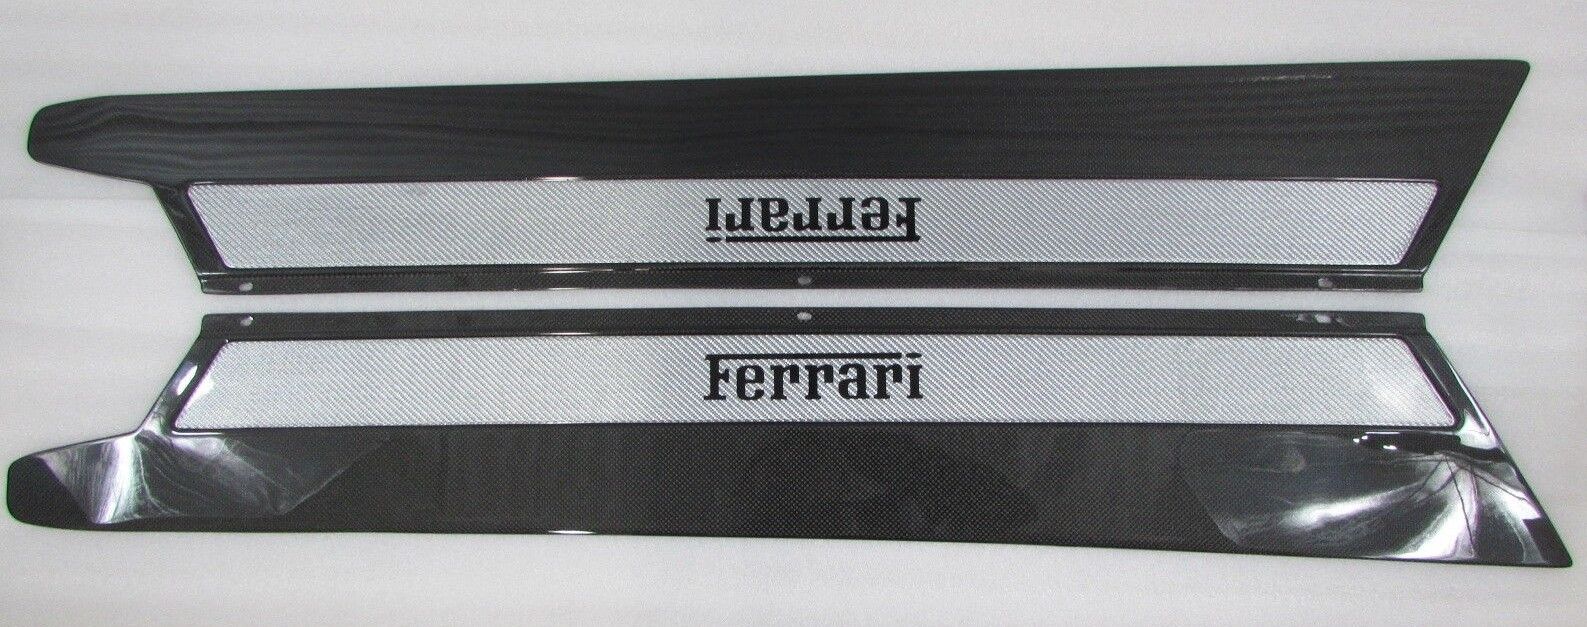 Ferrari 355, Door Step Plate, Black/Silver, Carbon Fiber, 1X1 Weave Pattern, New